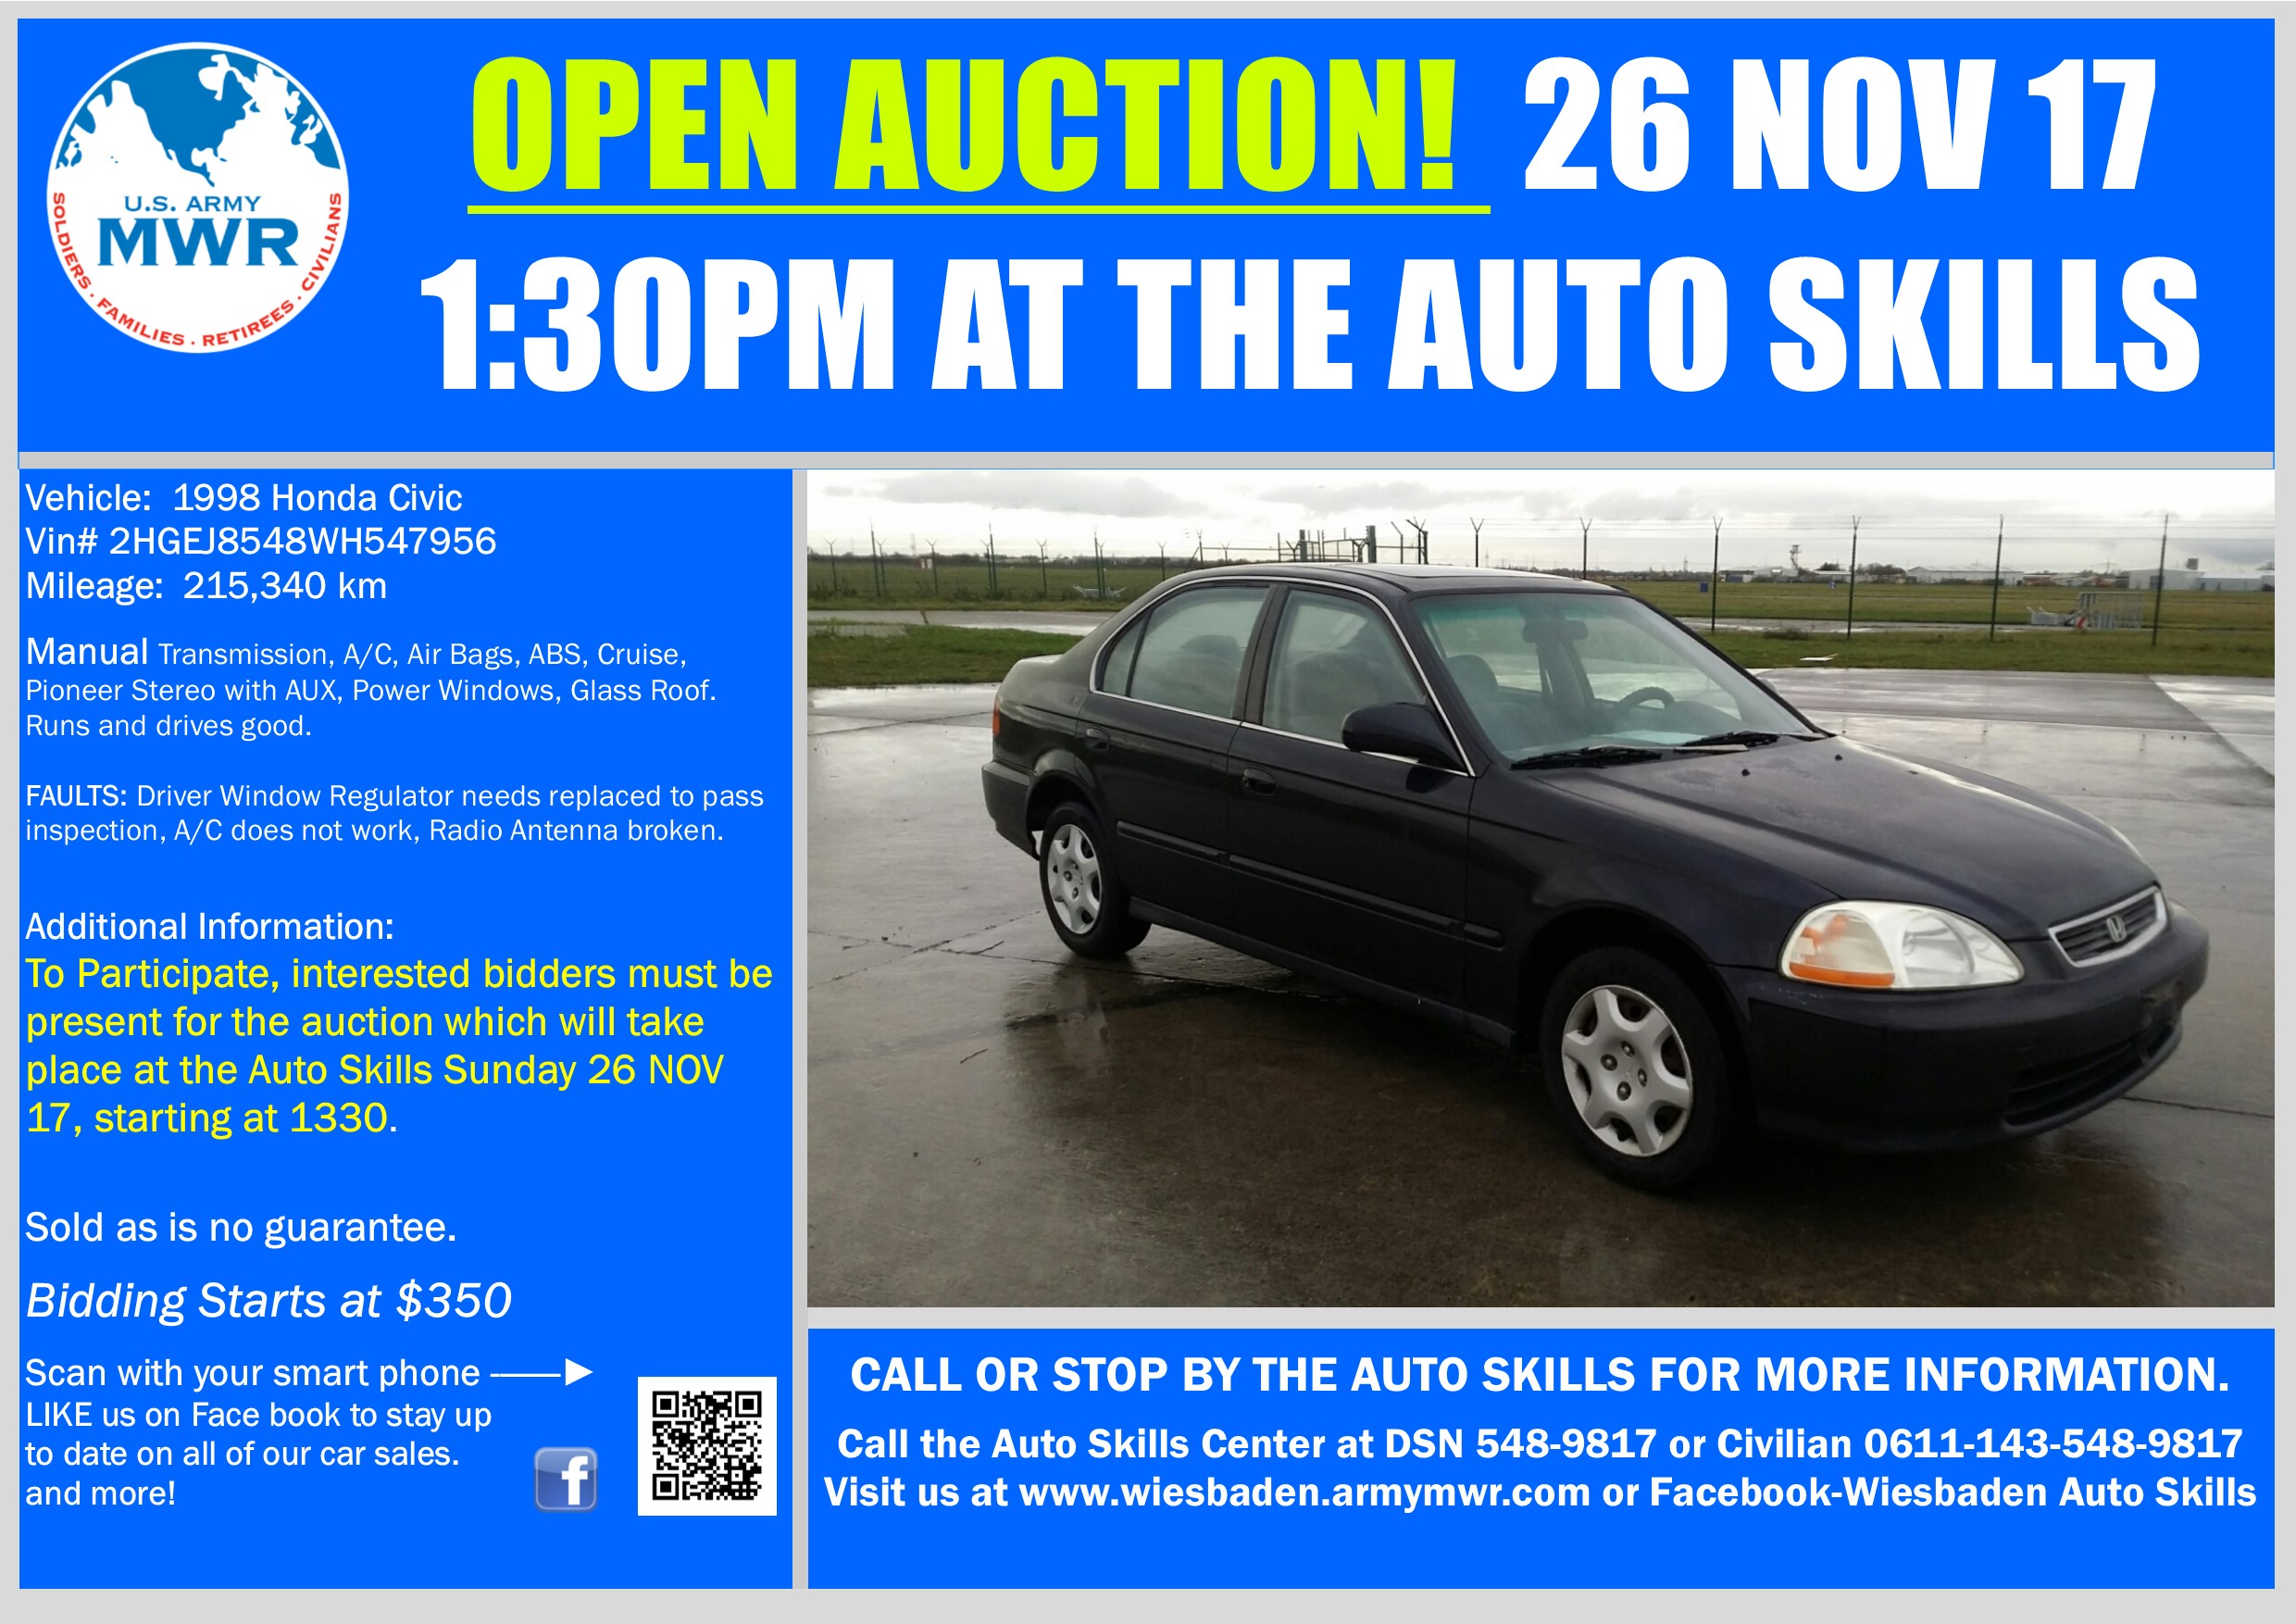 Sale_Honda Civic 26 Nov 17 Open Auction.jpg